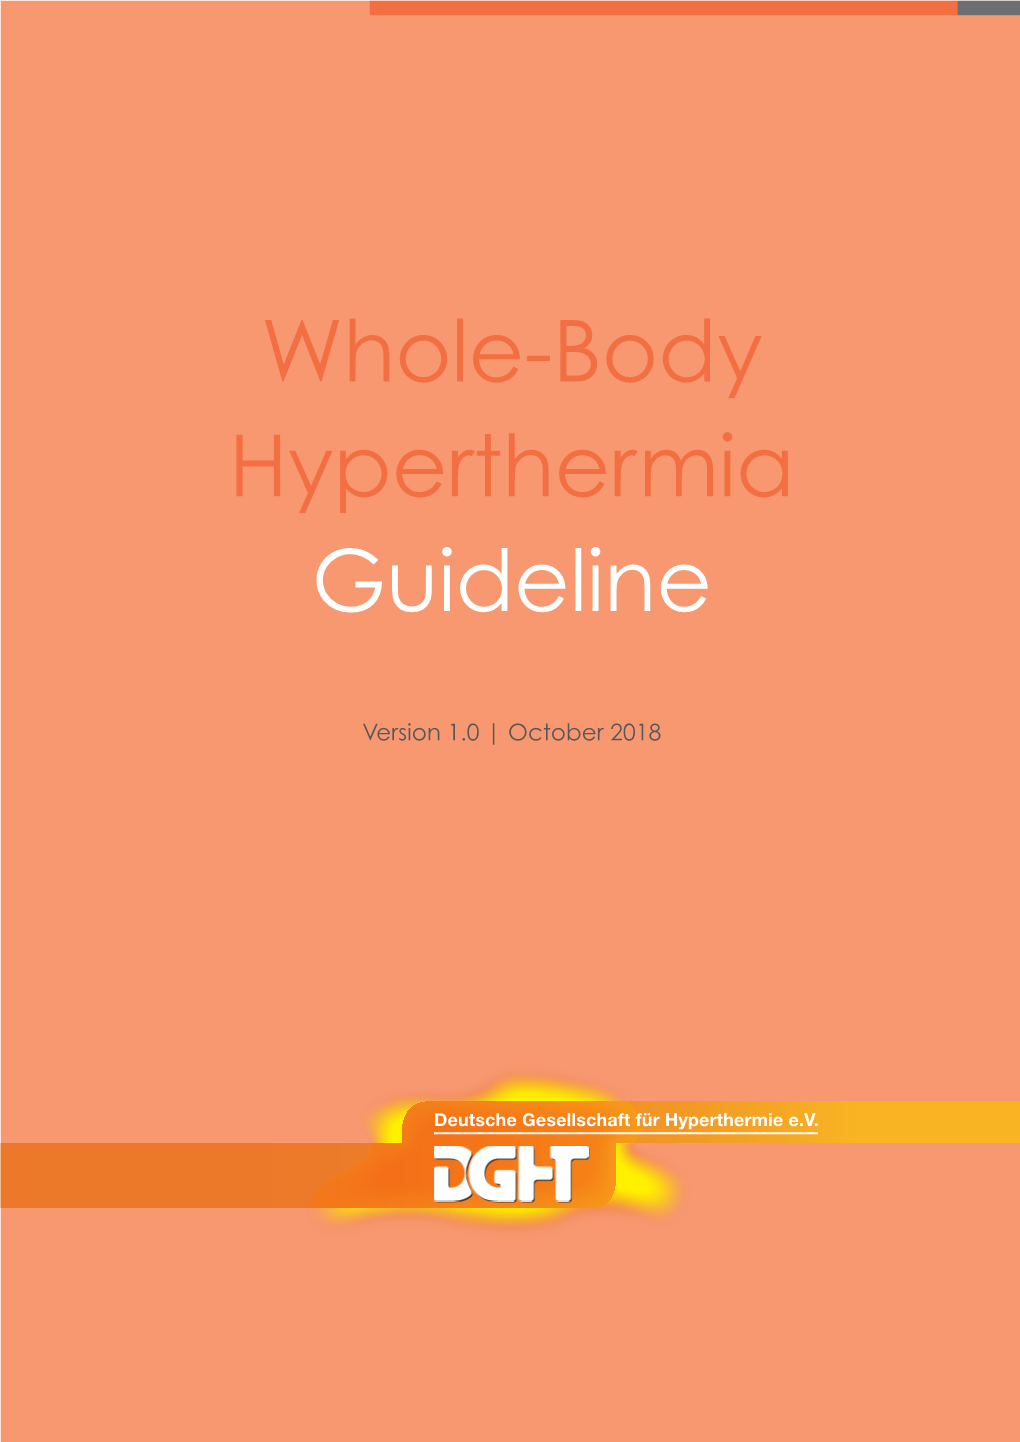 Whole-Body Hyperthermia Guideline